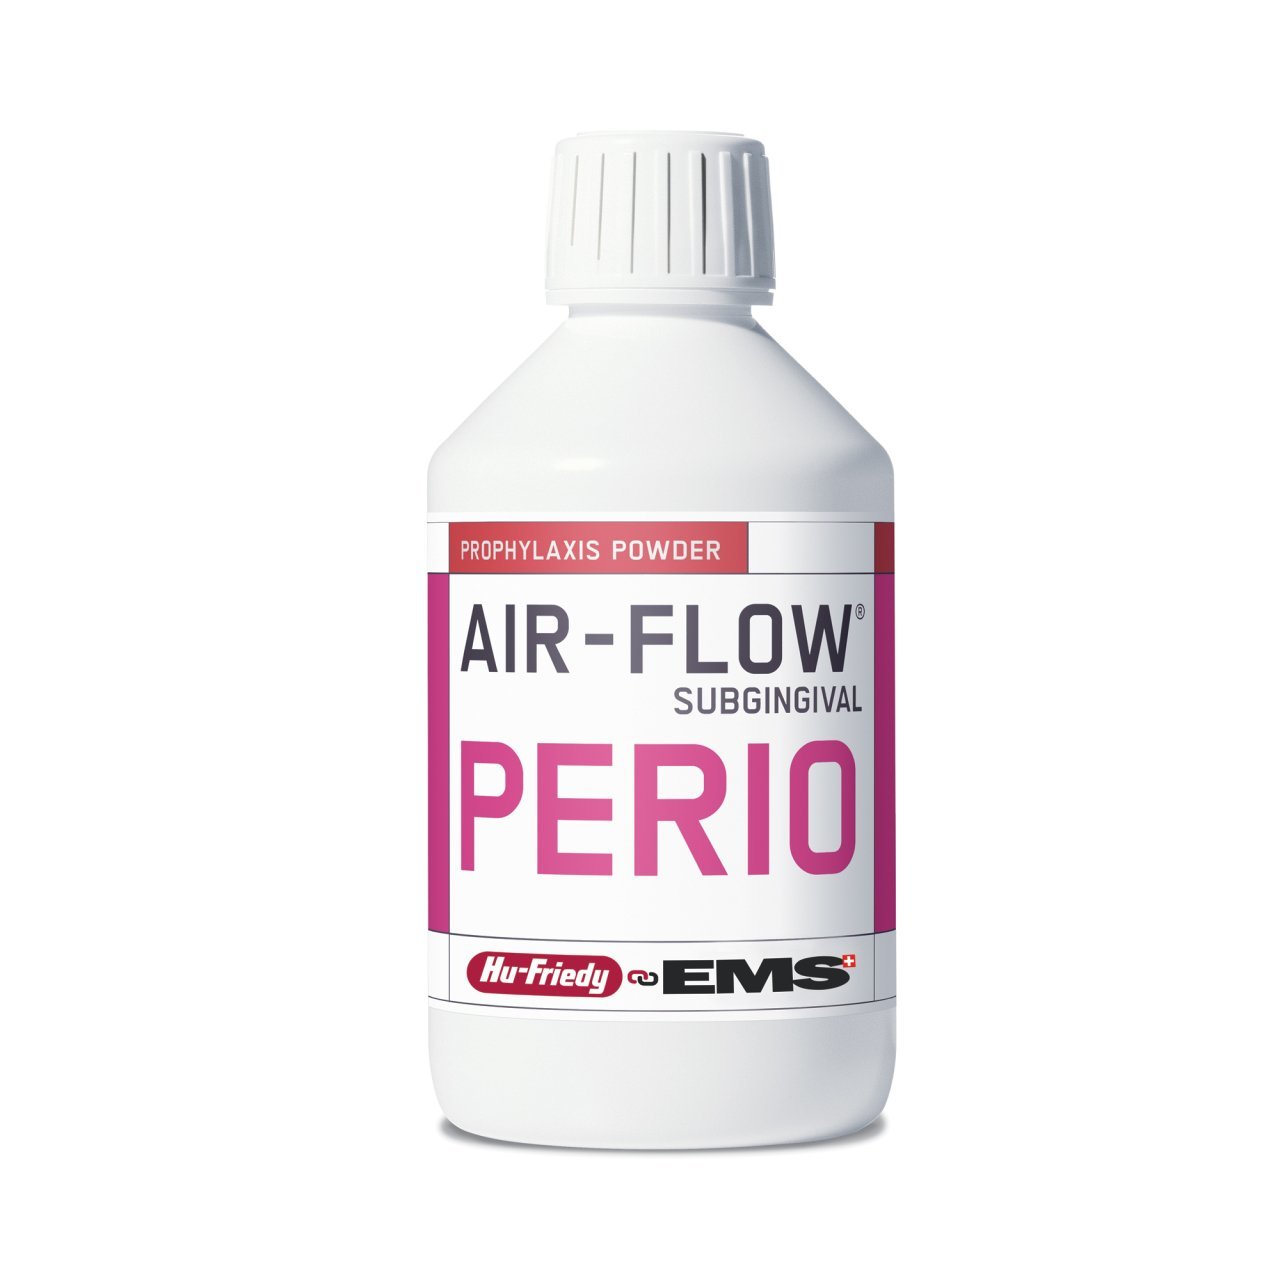 Air Flow Perio. Насадка Perio Flow купить.